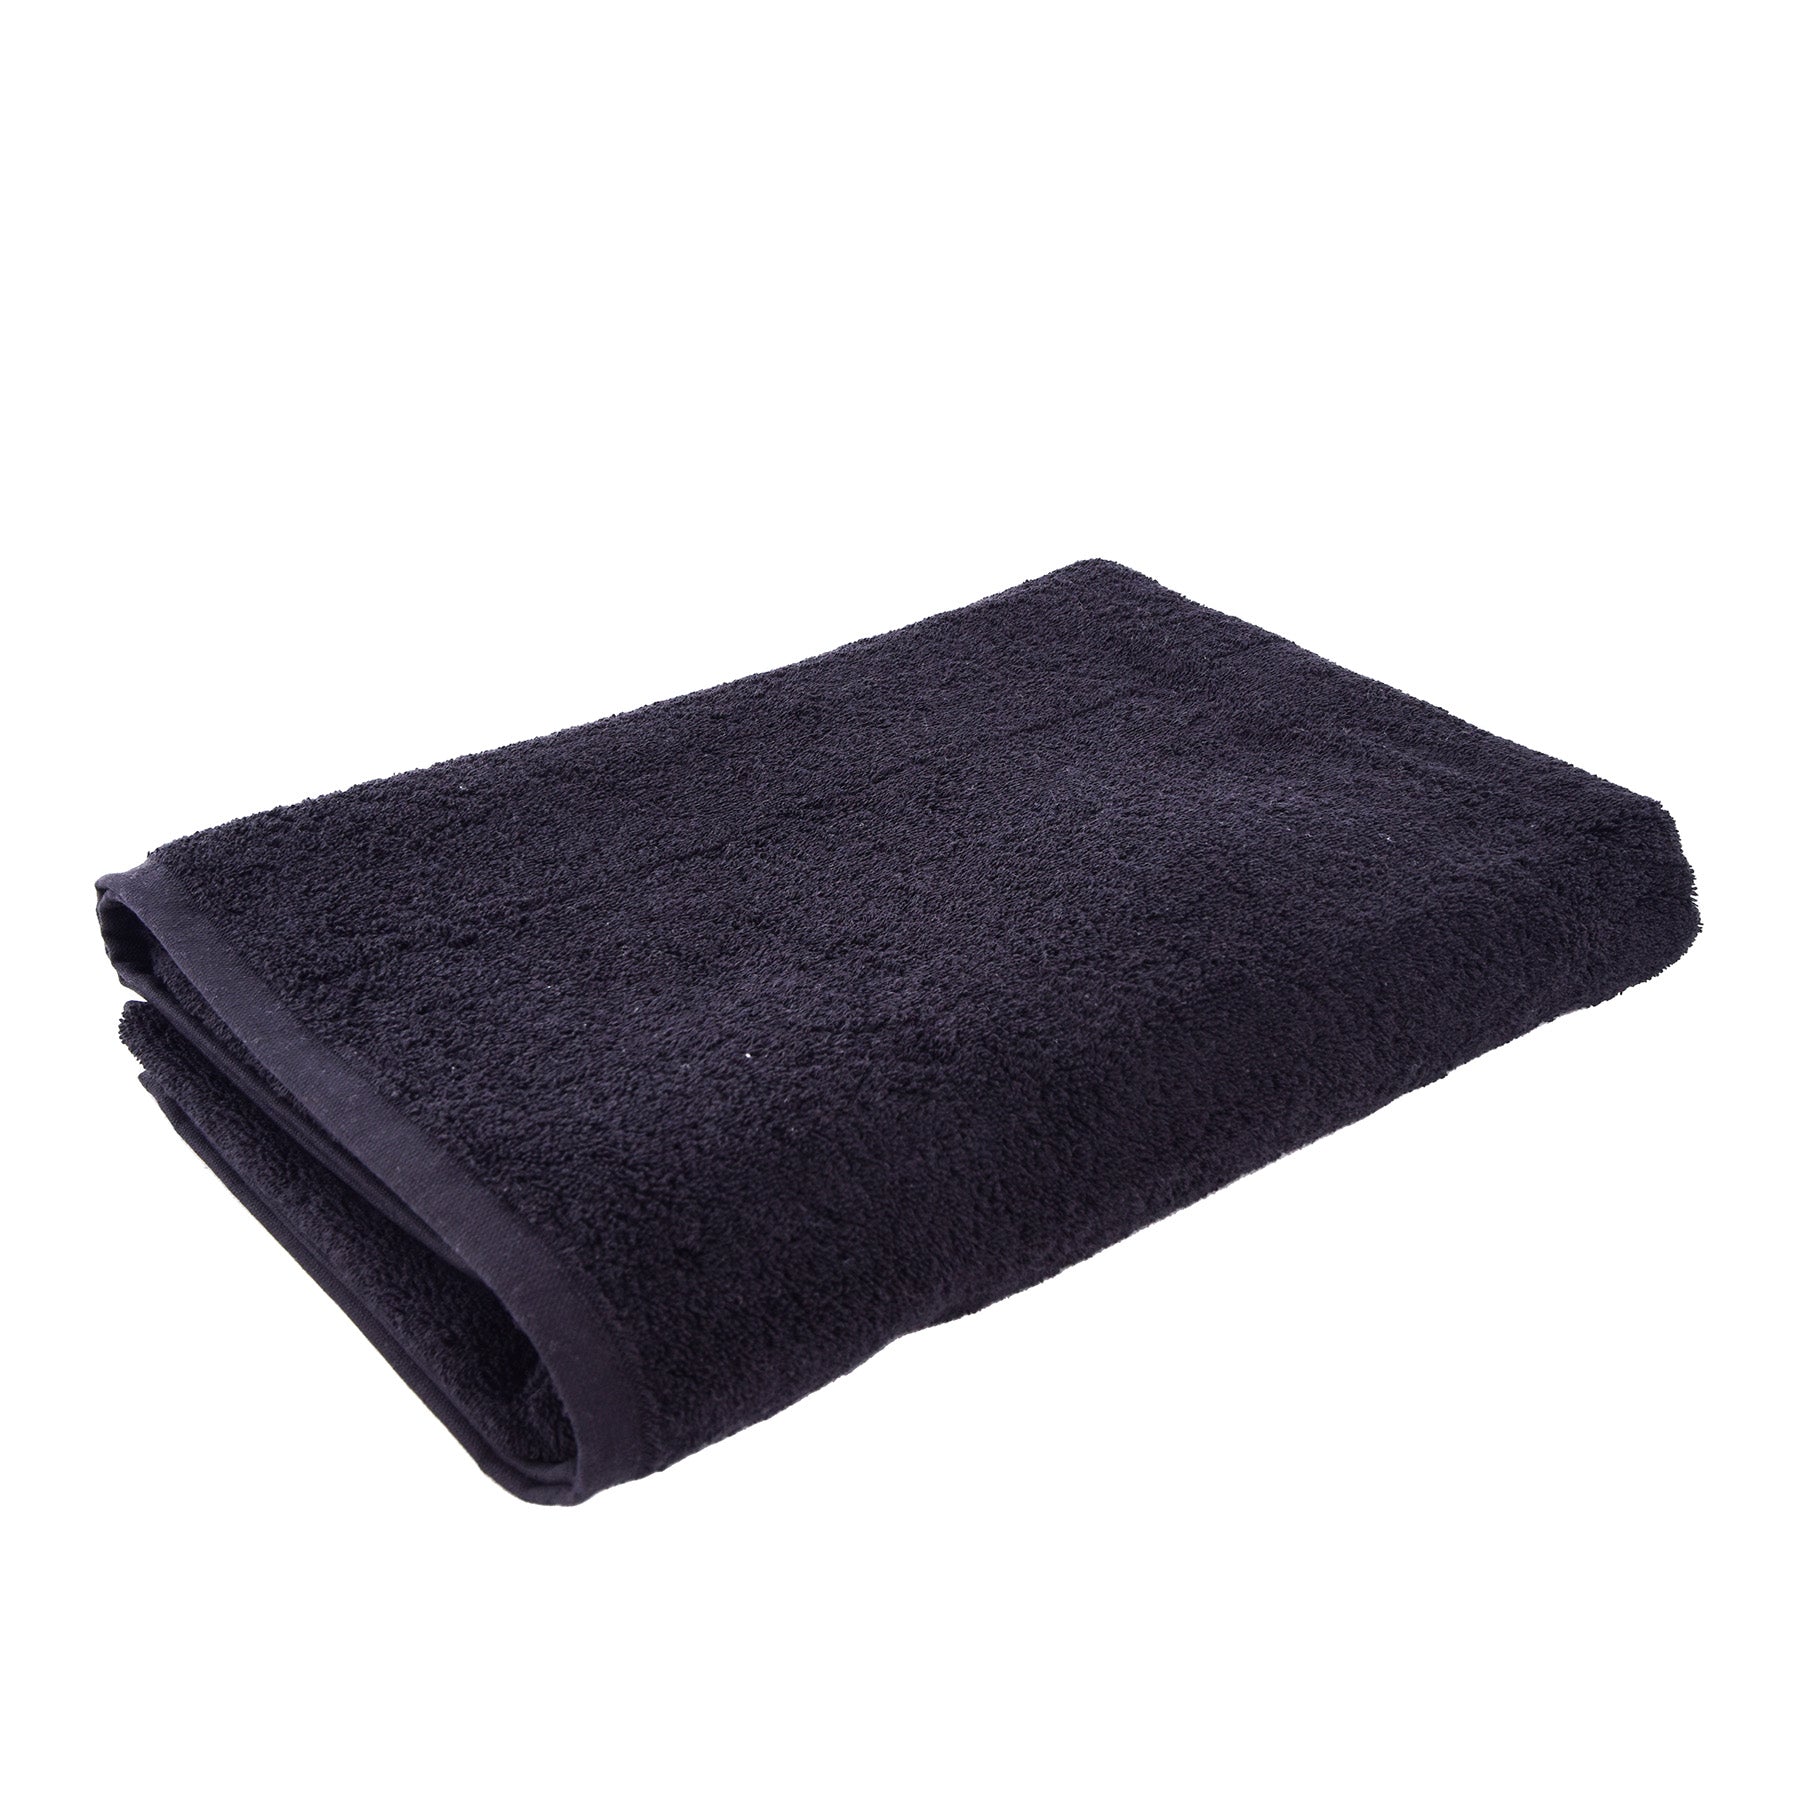 Bath Towel - BlackSize: 81x163cm.